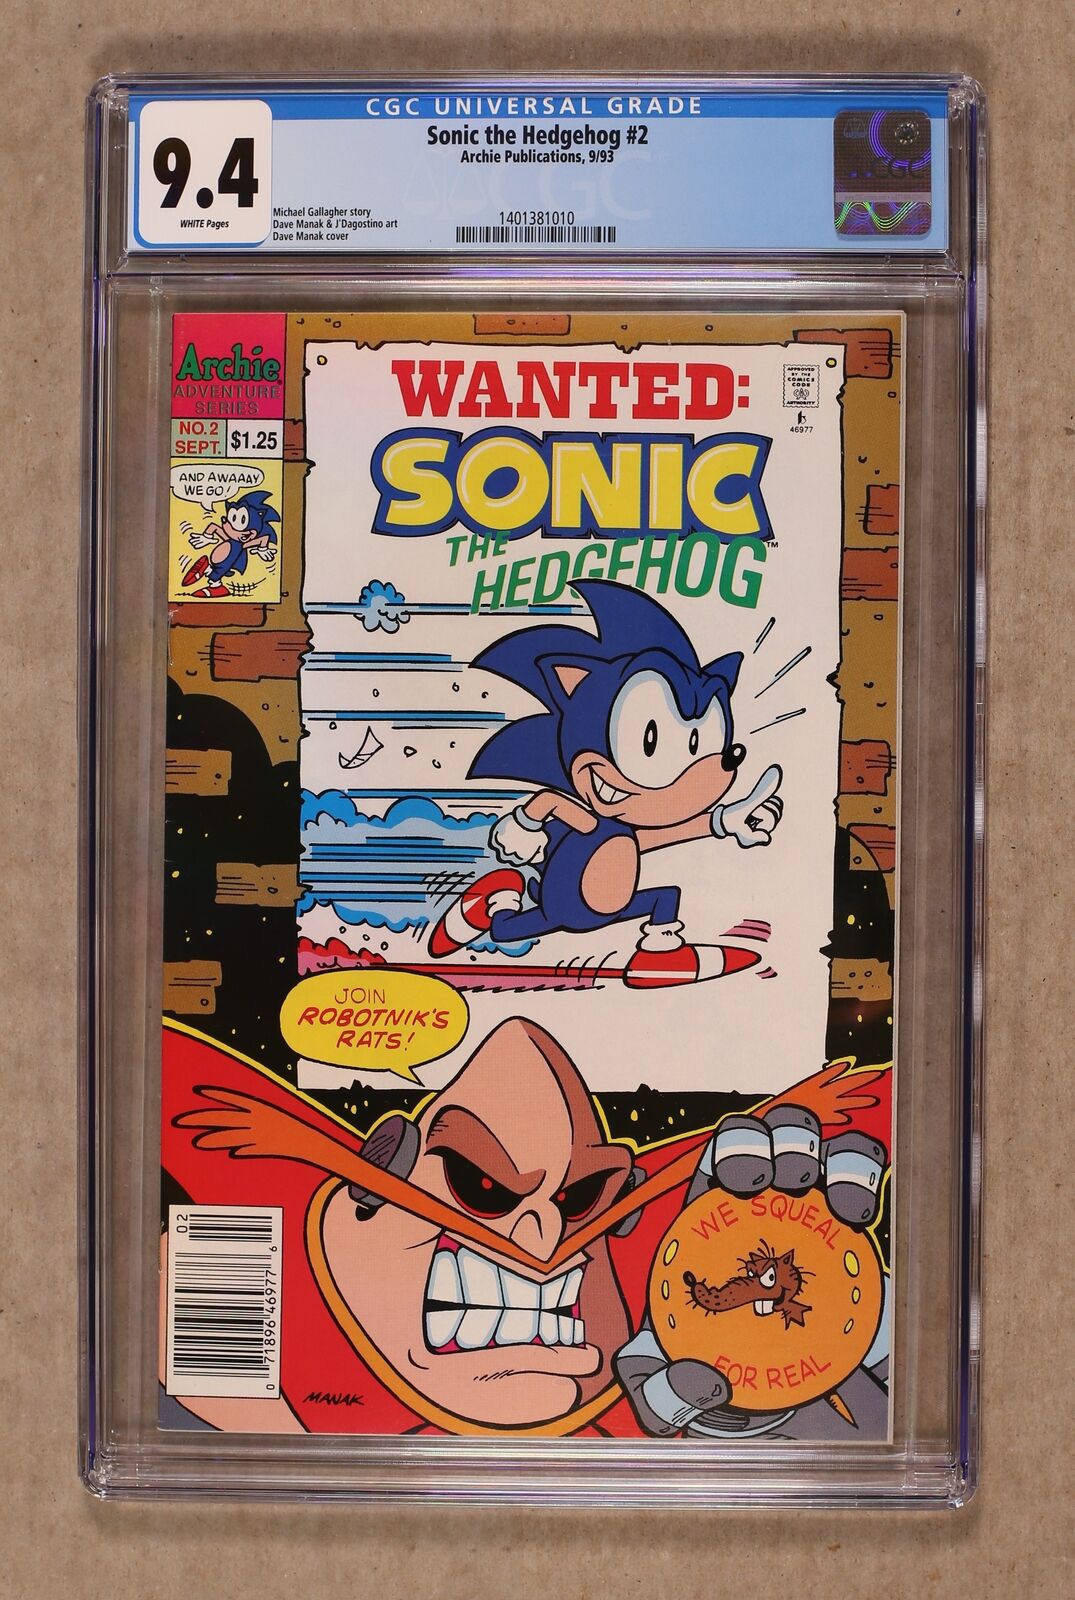 Sonic the Hedgehog #2 CGC 9.4 1993 Archie 1401381010